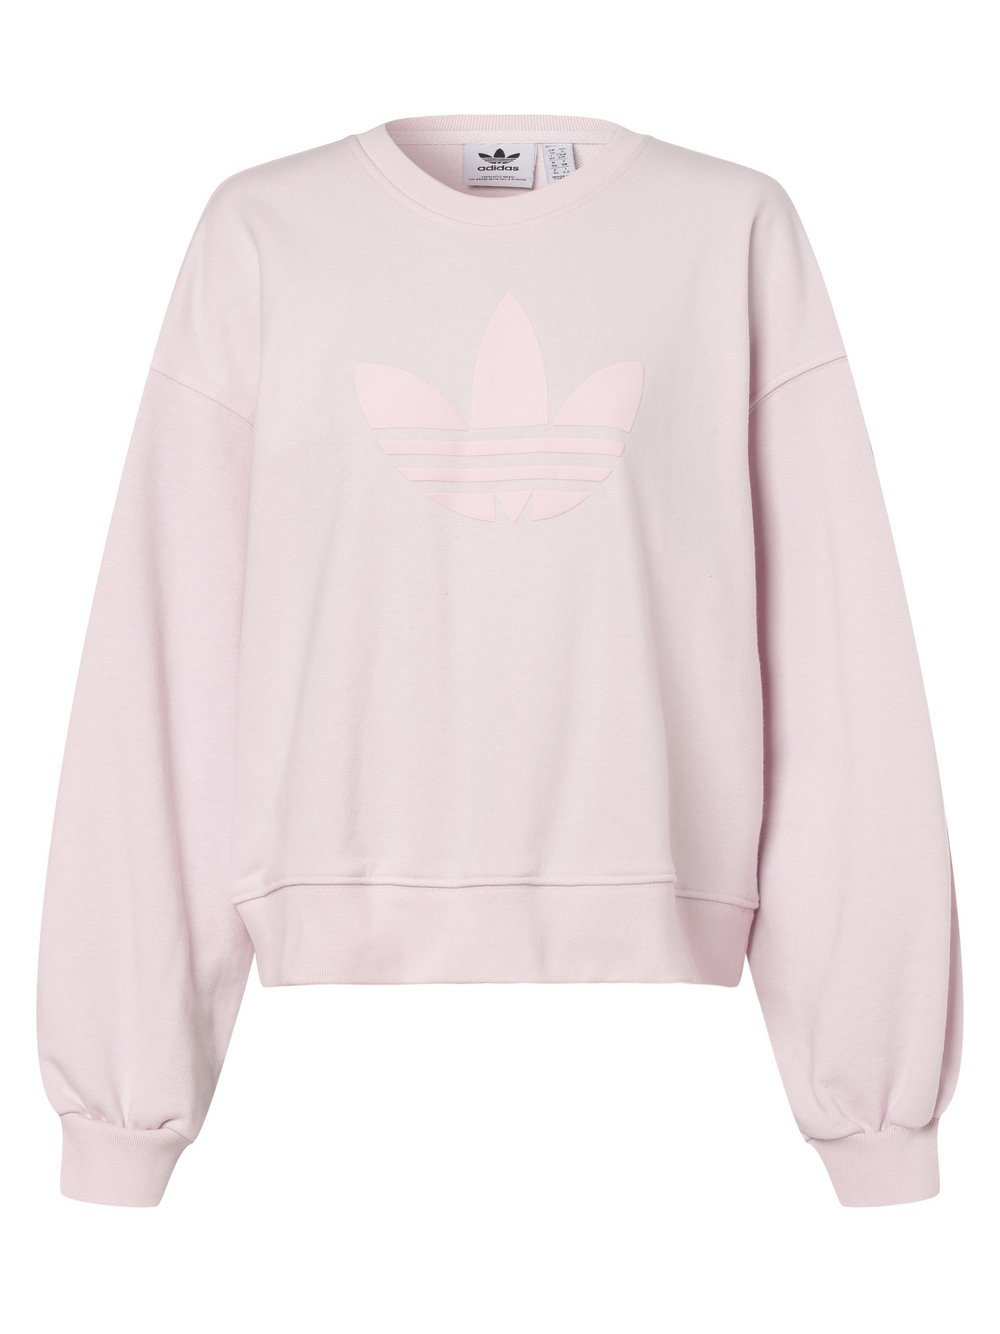 Adidas Originals - Damska bluza nierozpinana, różowy